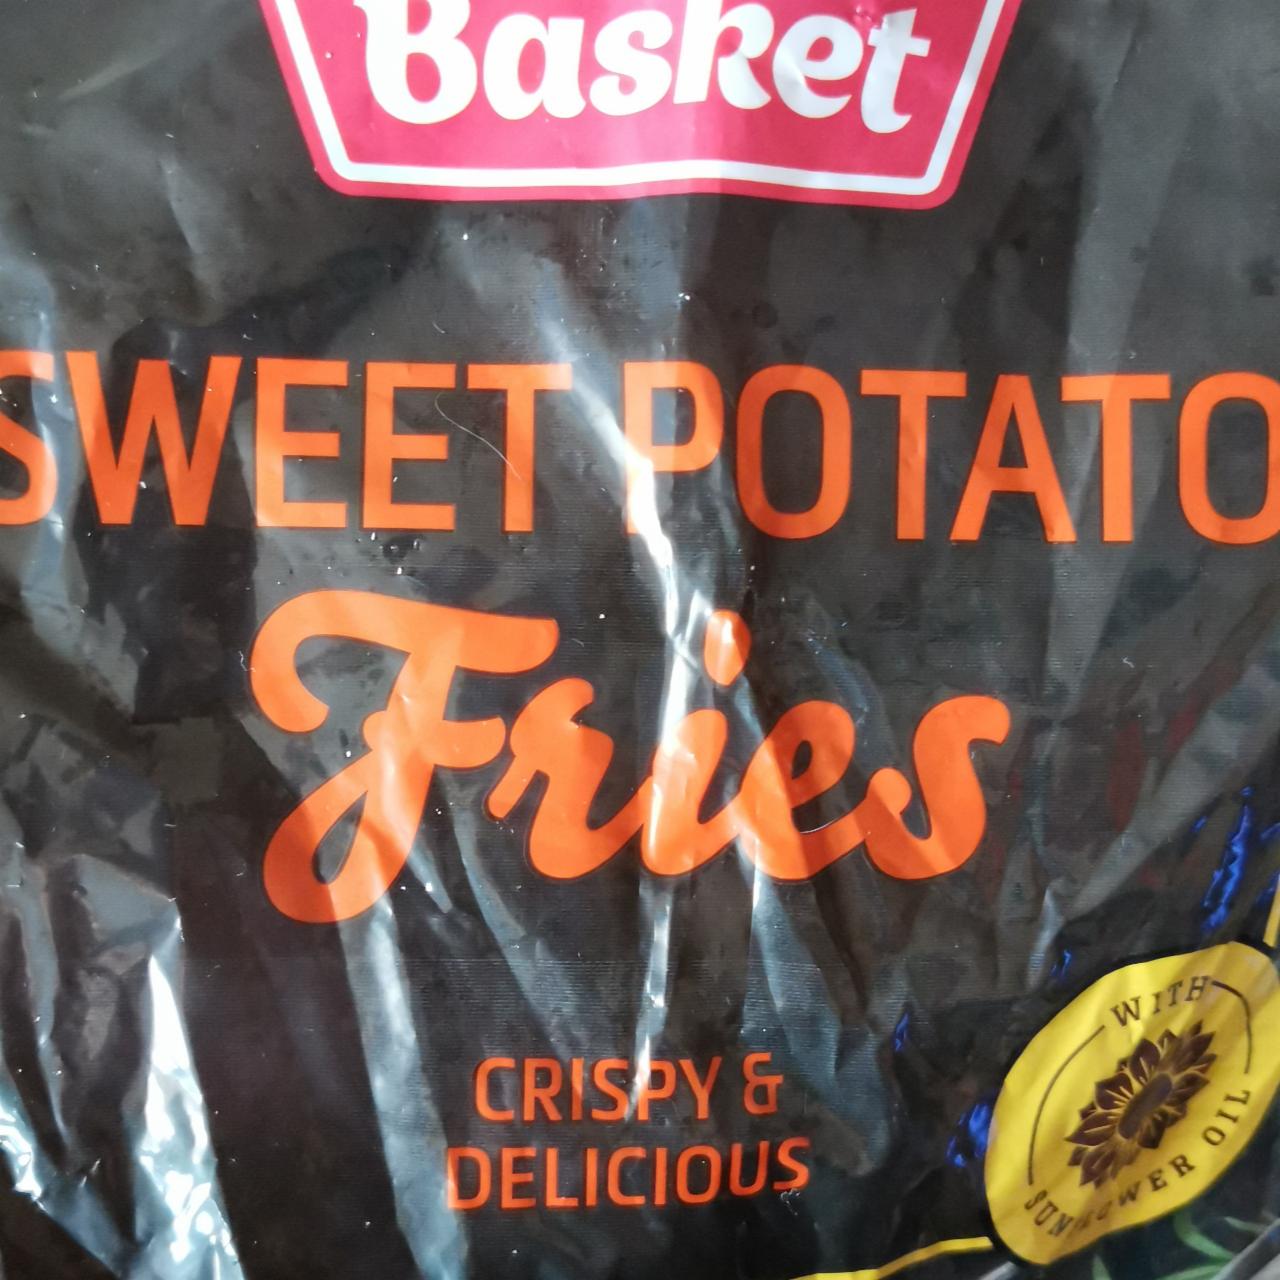 Fotografie - Sweet Potato Fries Harvest Basket